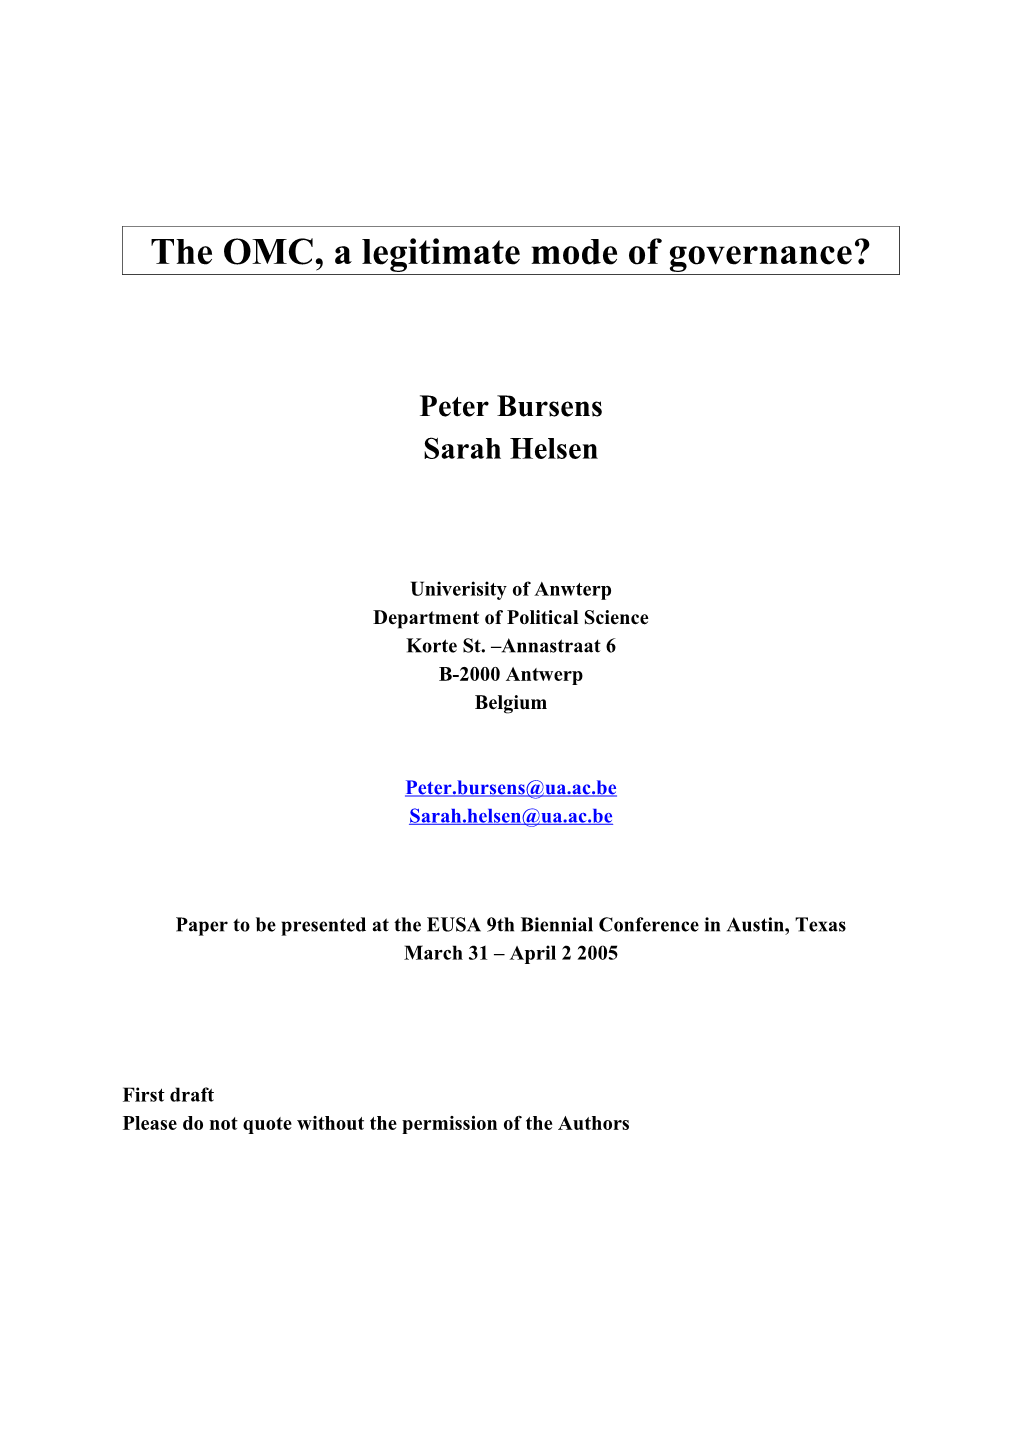 The OMC, a Legitimacy Increasing Method